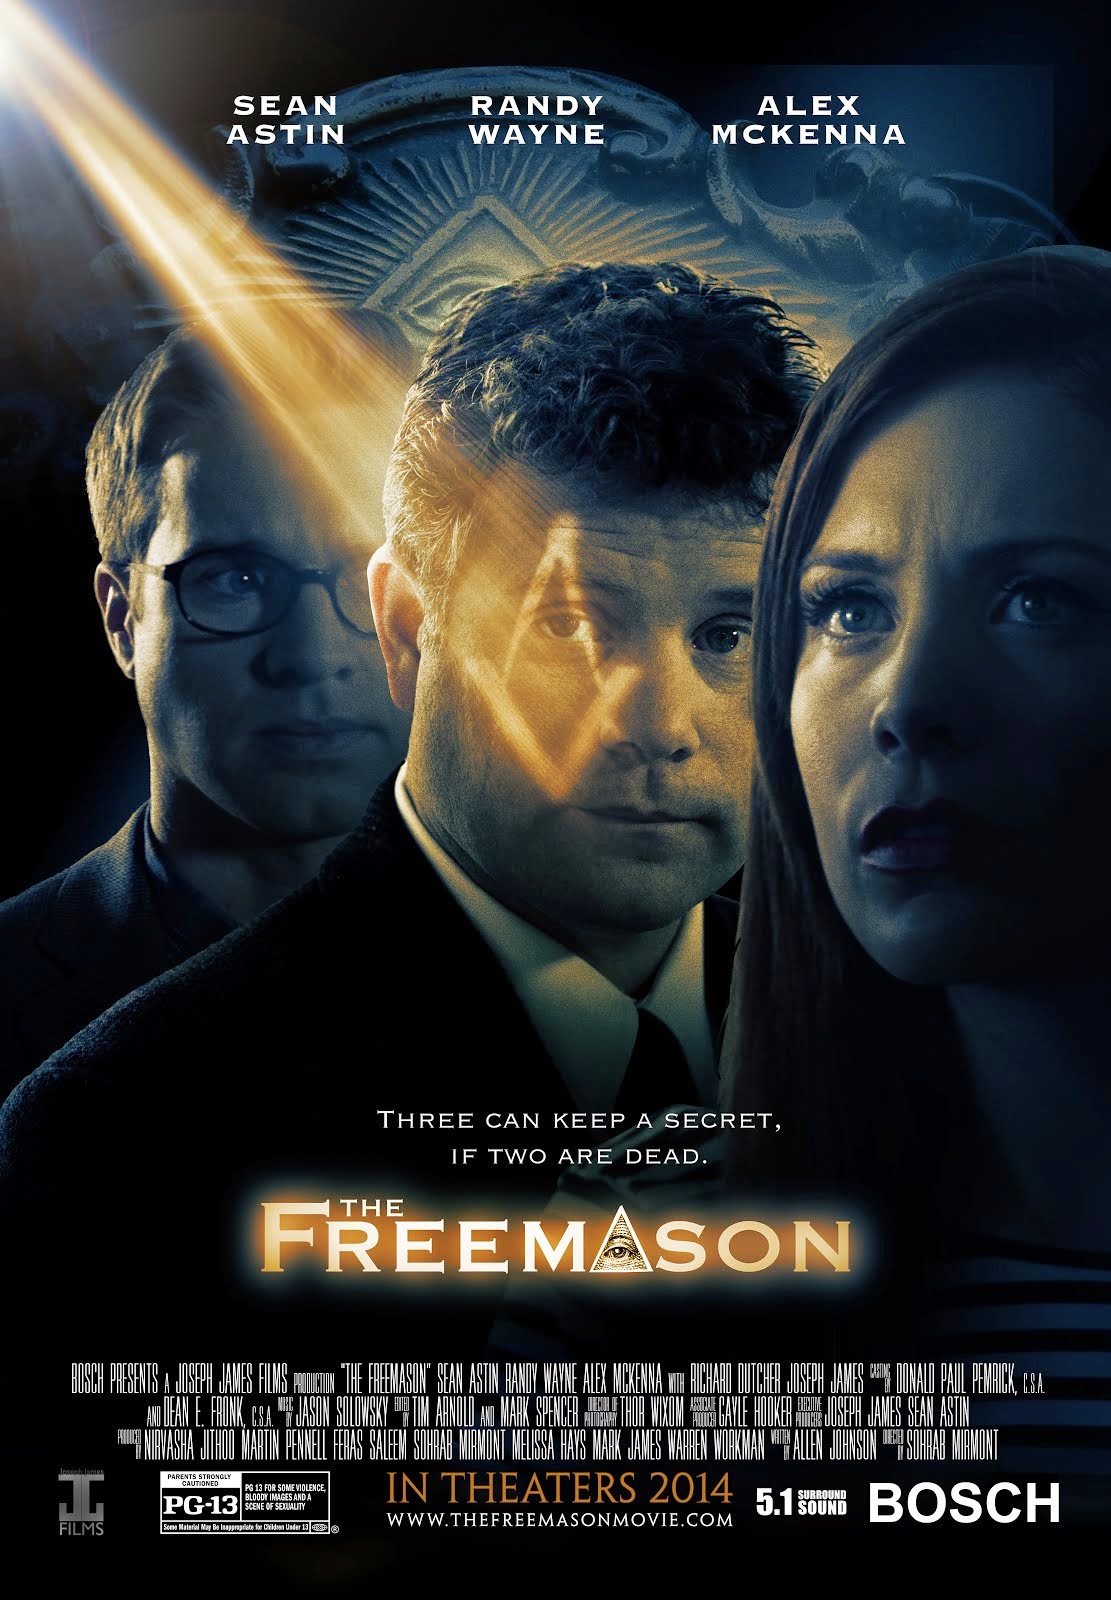 The Freemason Theatrical Poster